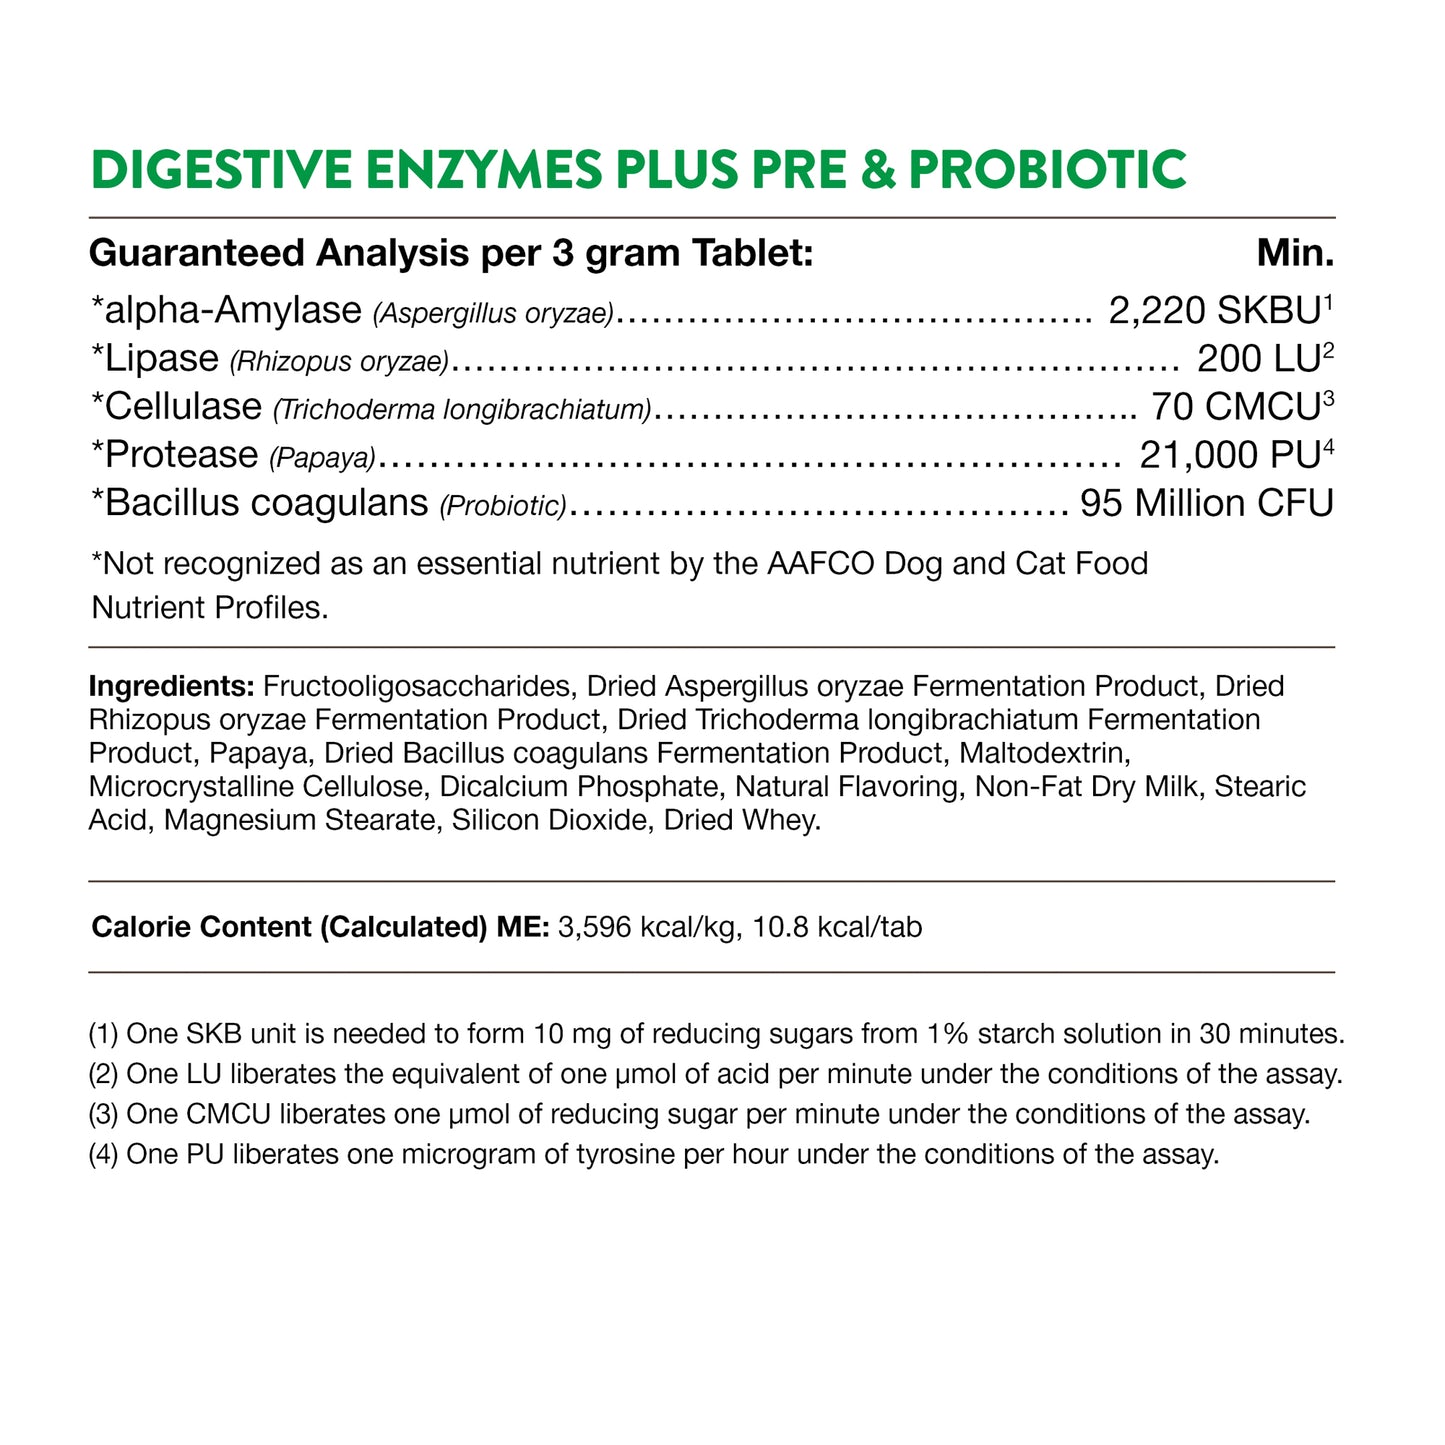 Digestive Enzymes Chewable Tablets with Prebiotics & Probiotics